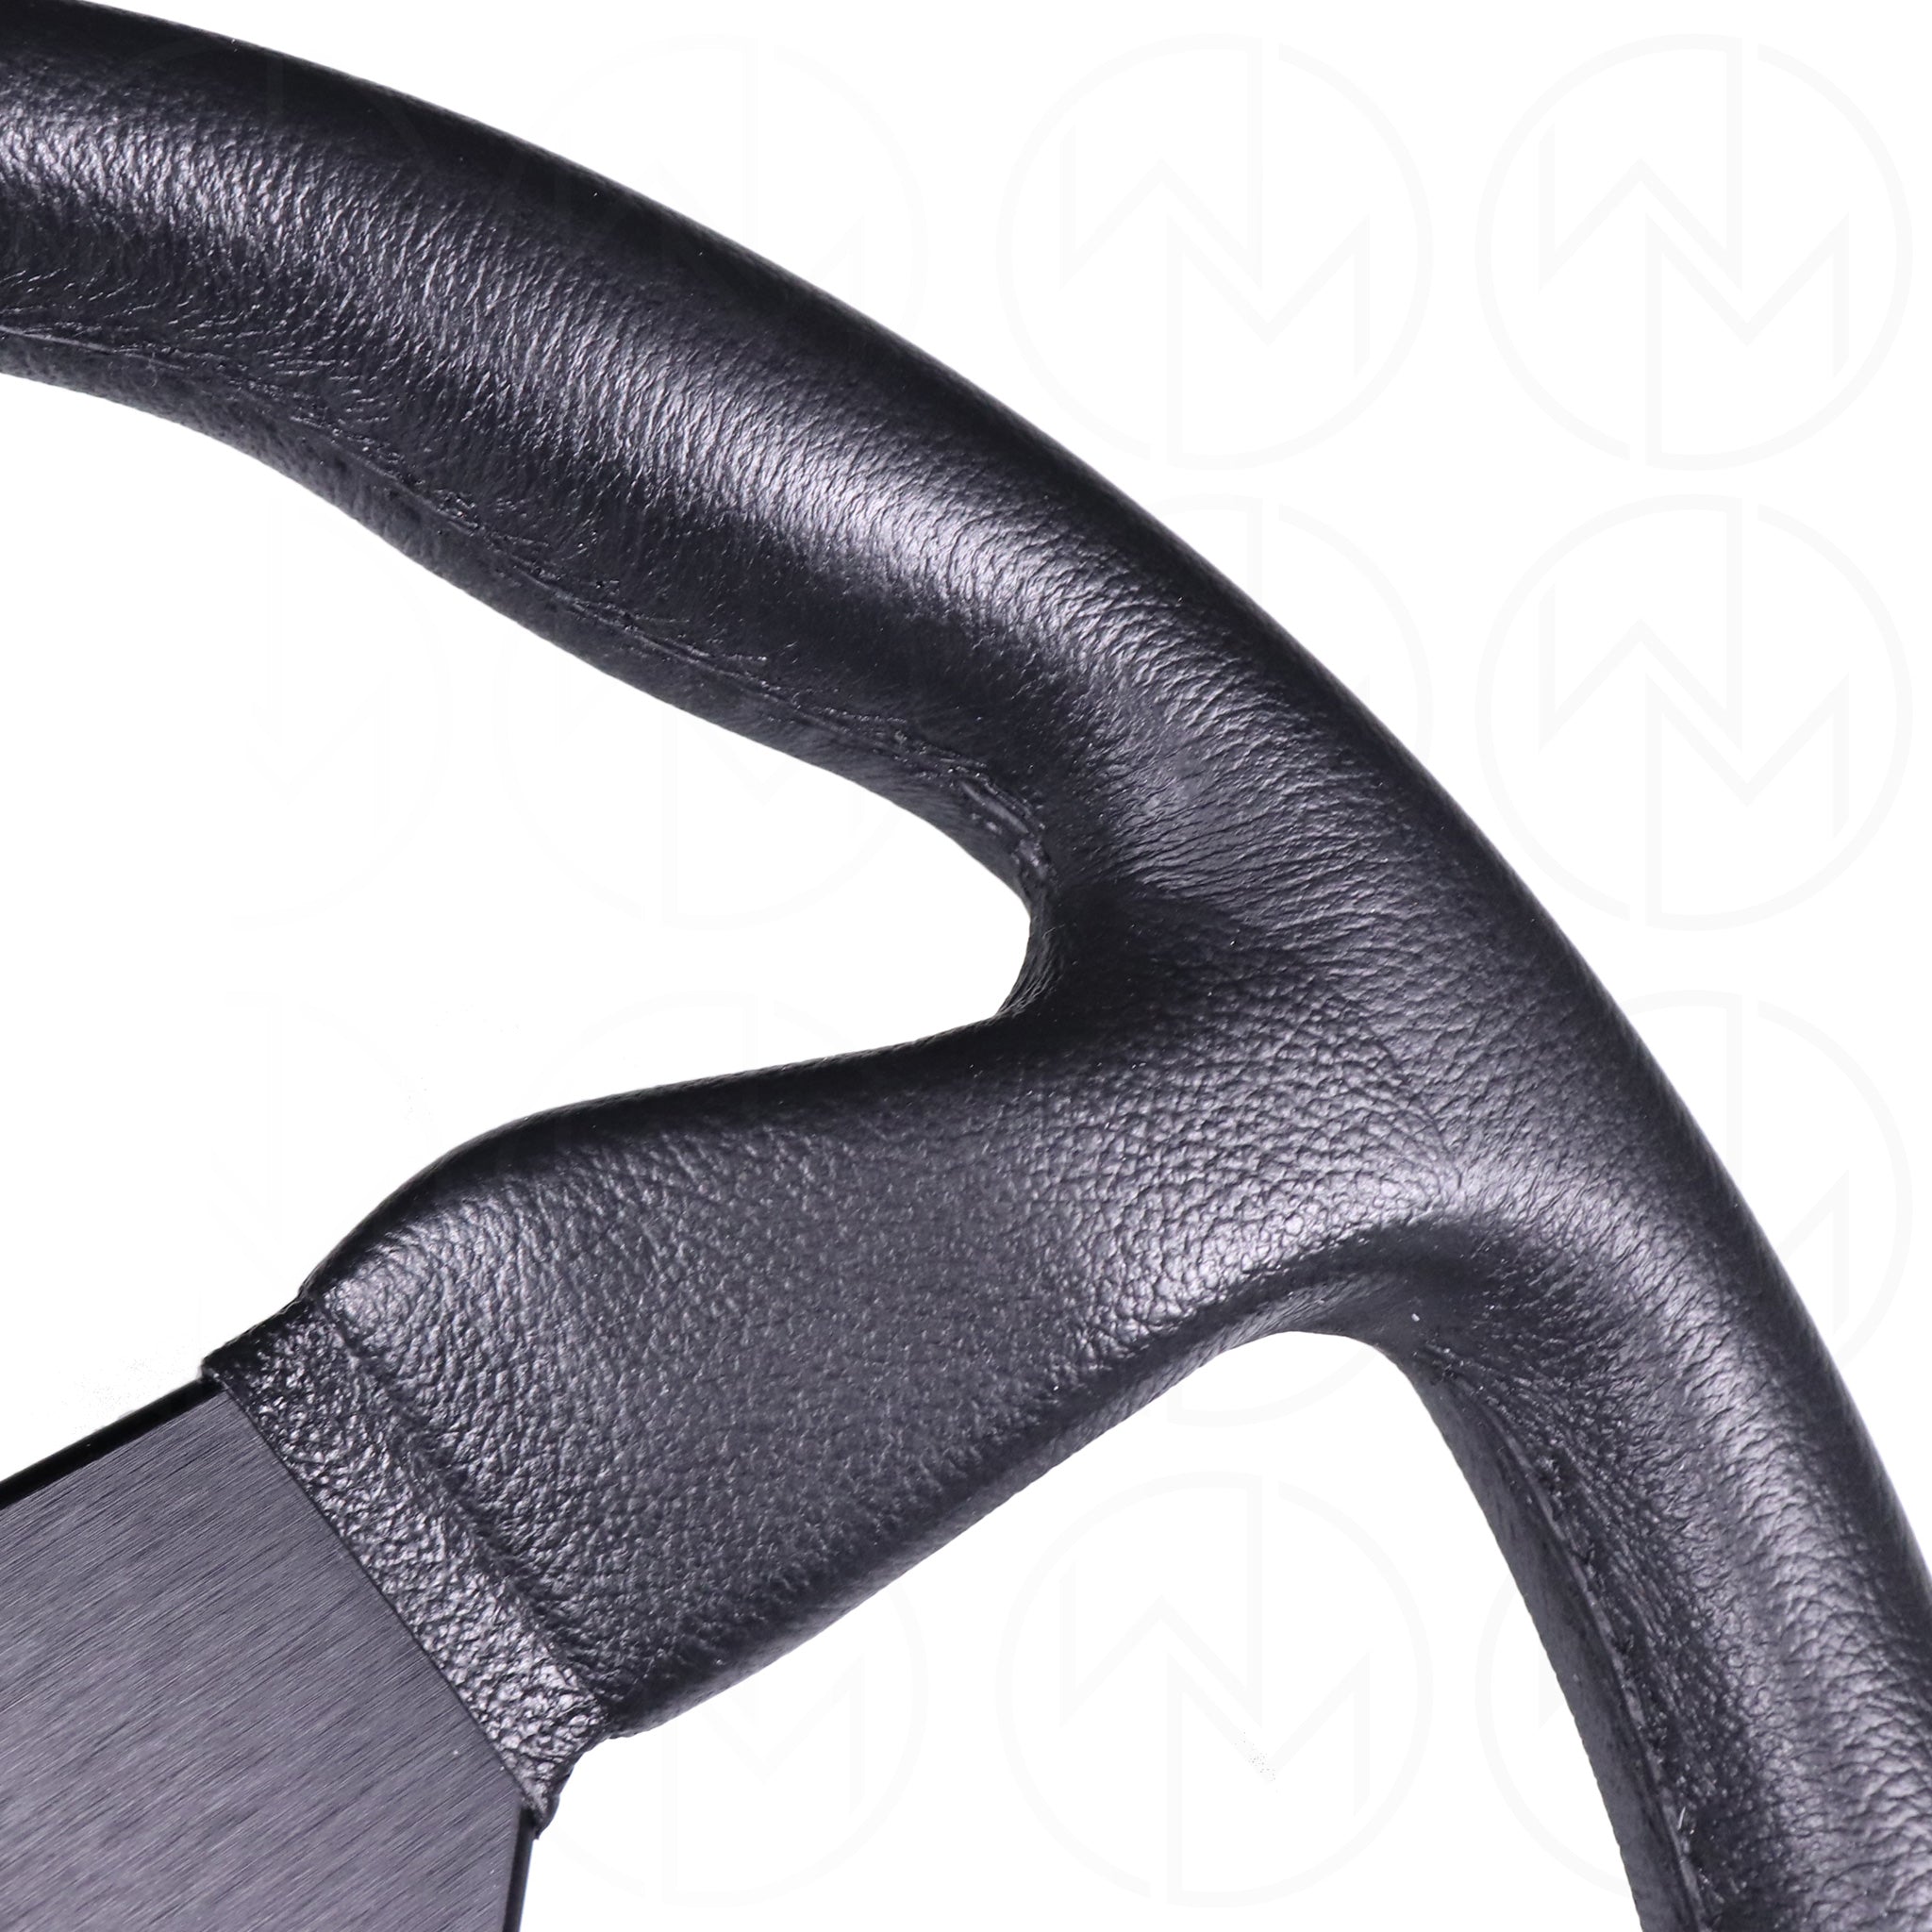 Personal Grinta P/U Steering Wheel - 350mm Polyurethane w/Blue Horn Button